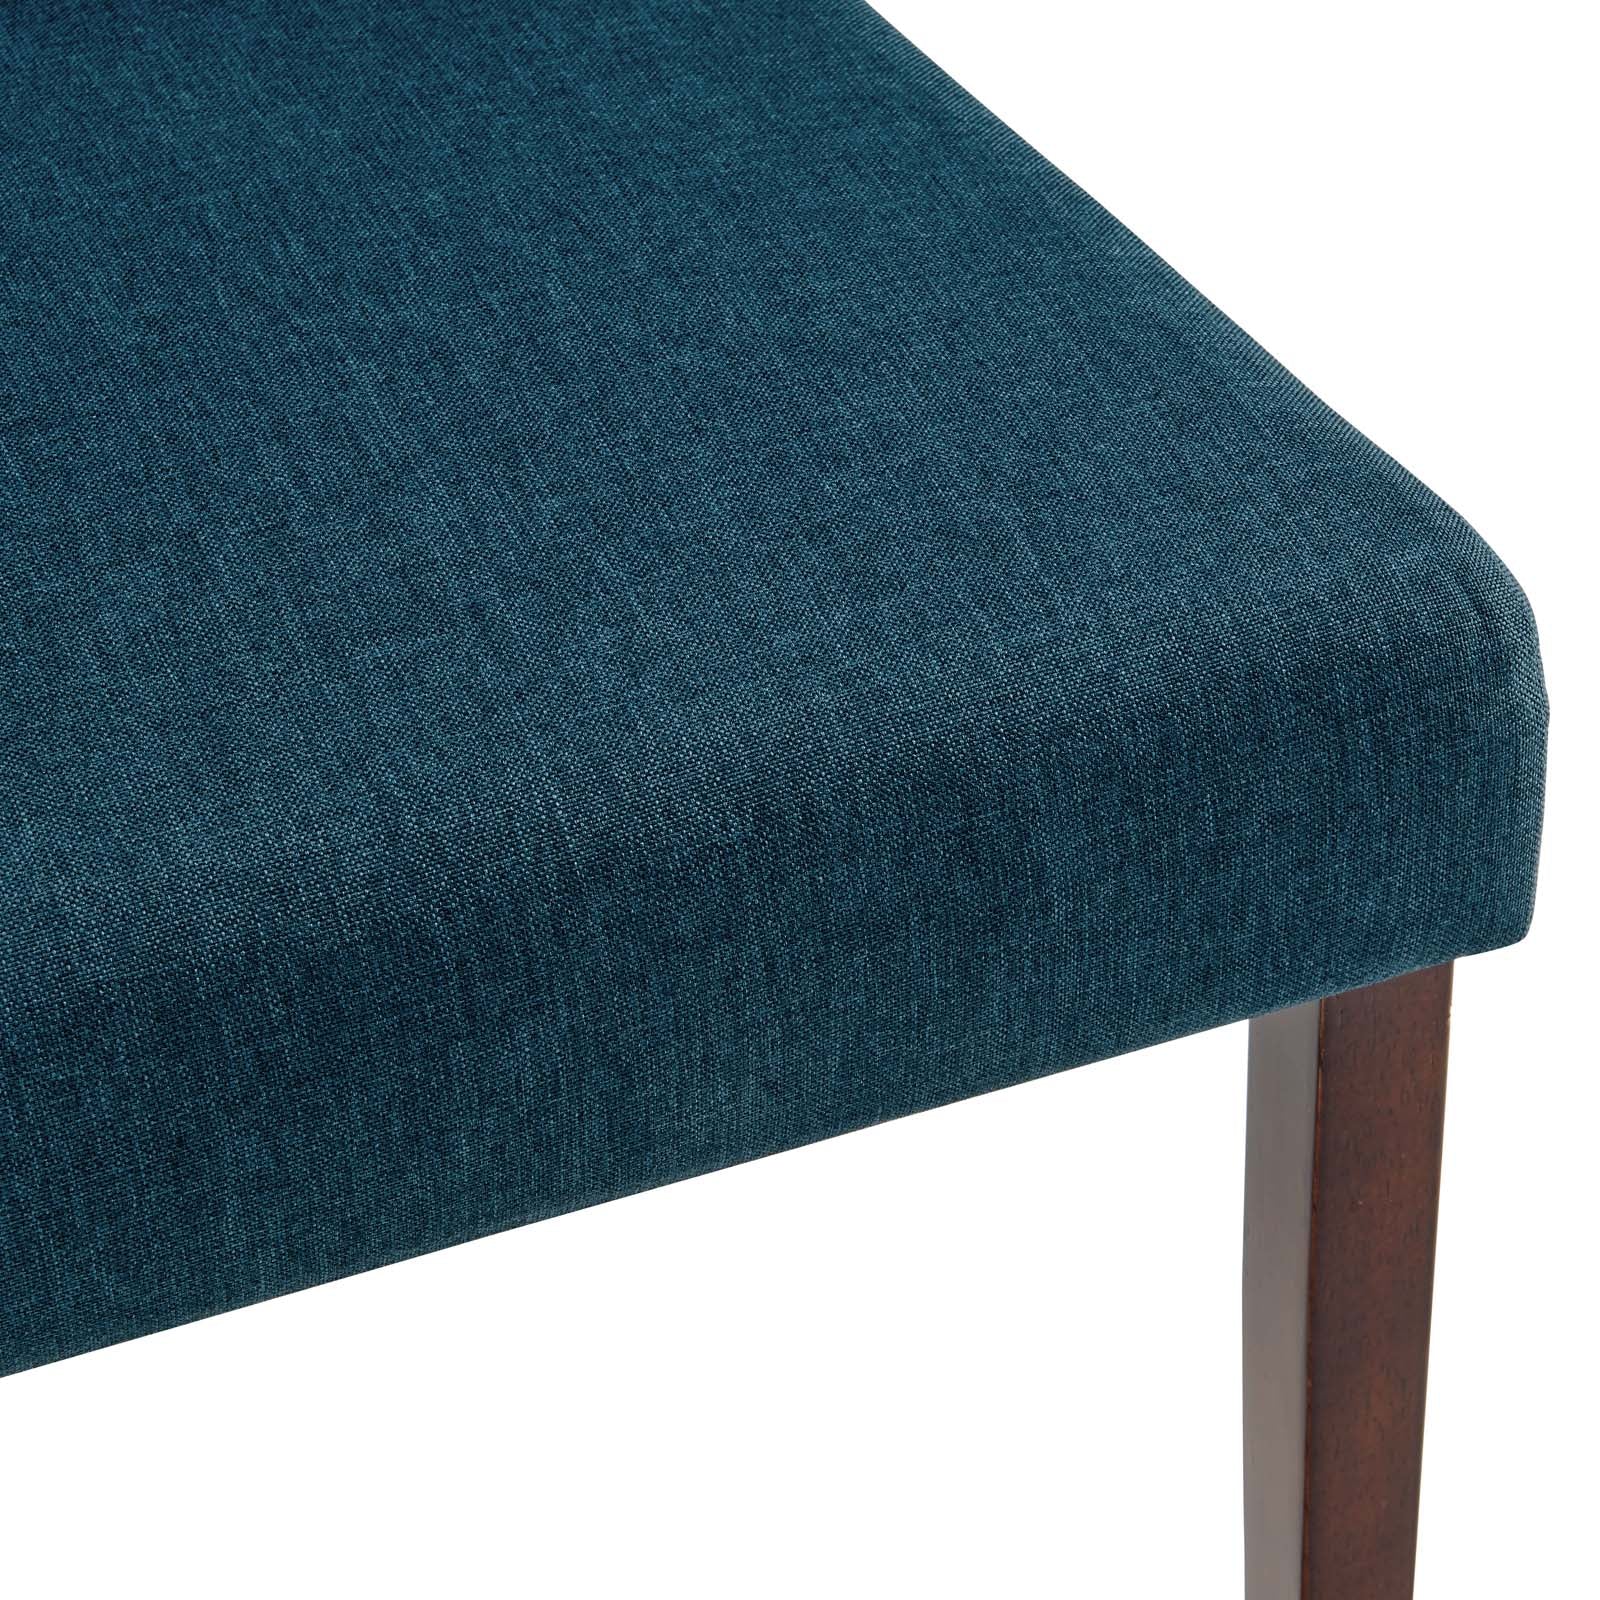 Prosper Upholstered Fabric Dining Side Chair Set of 2 - East Shore Modern Home Furnishings